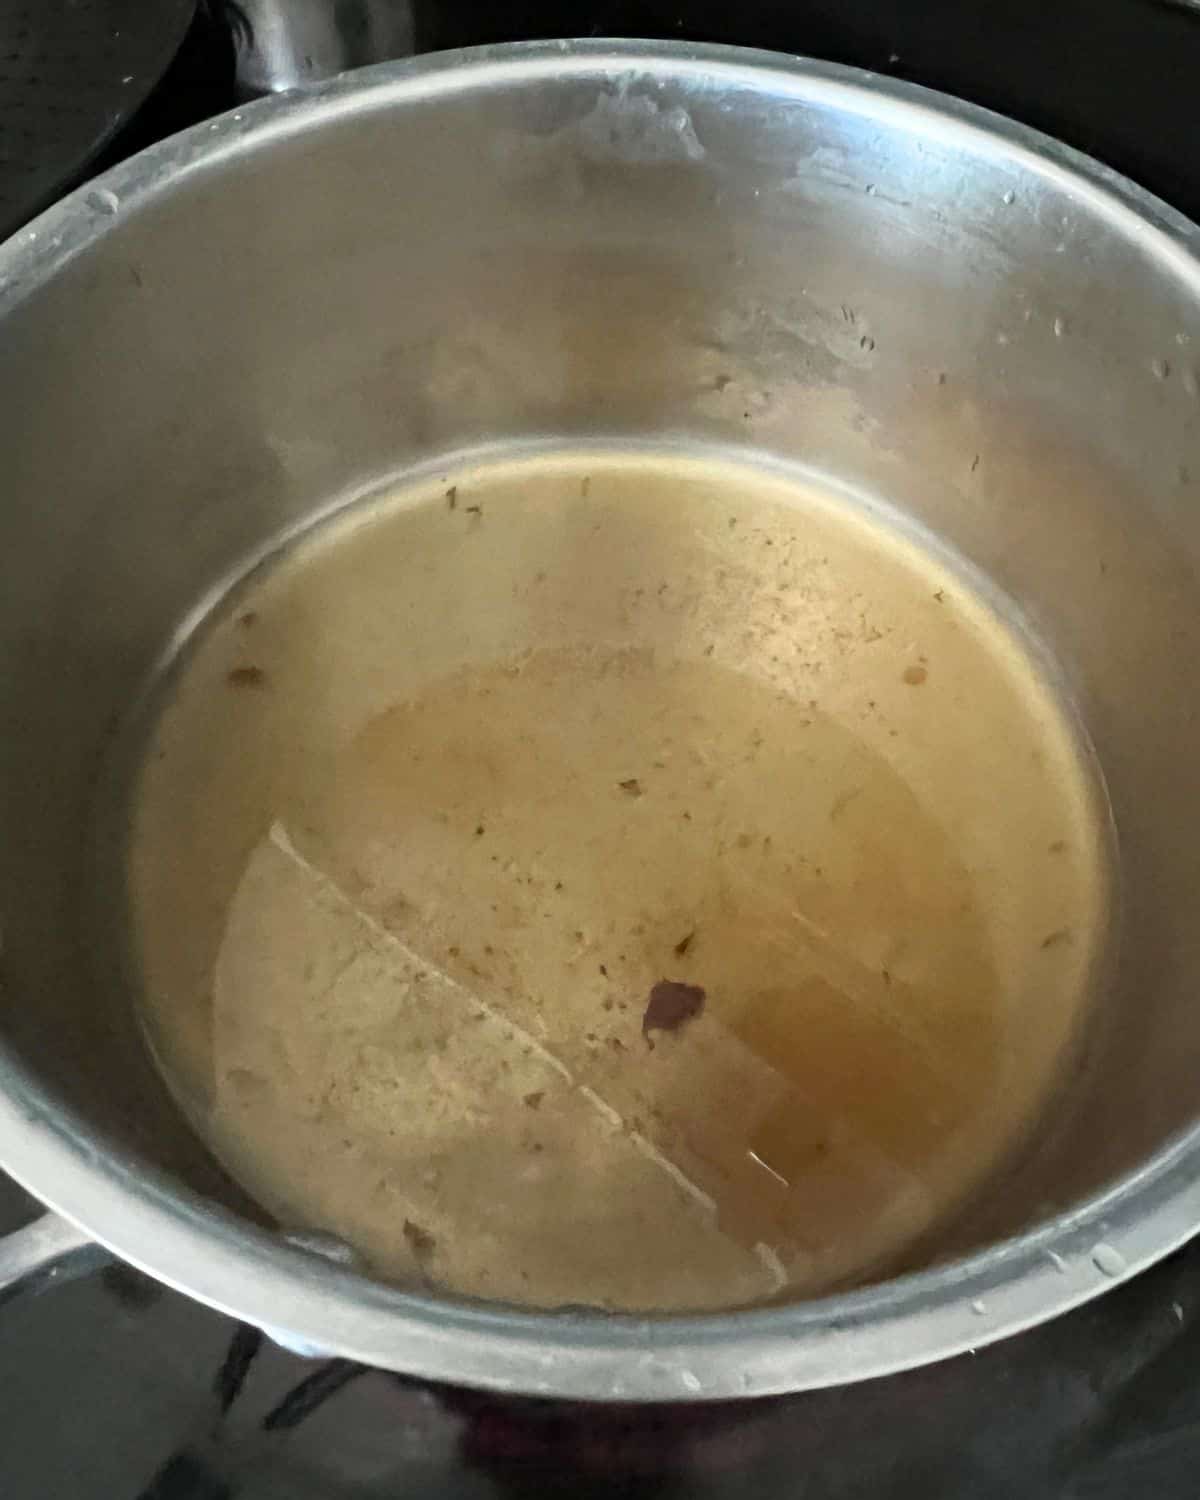 Vinegar, sugar, and limes in a sauce pan. 